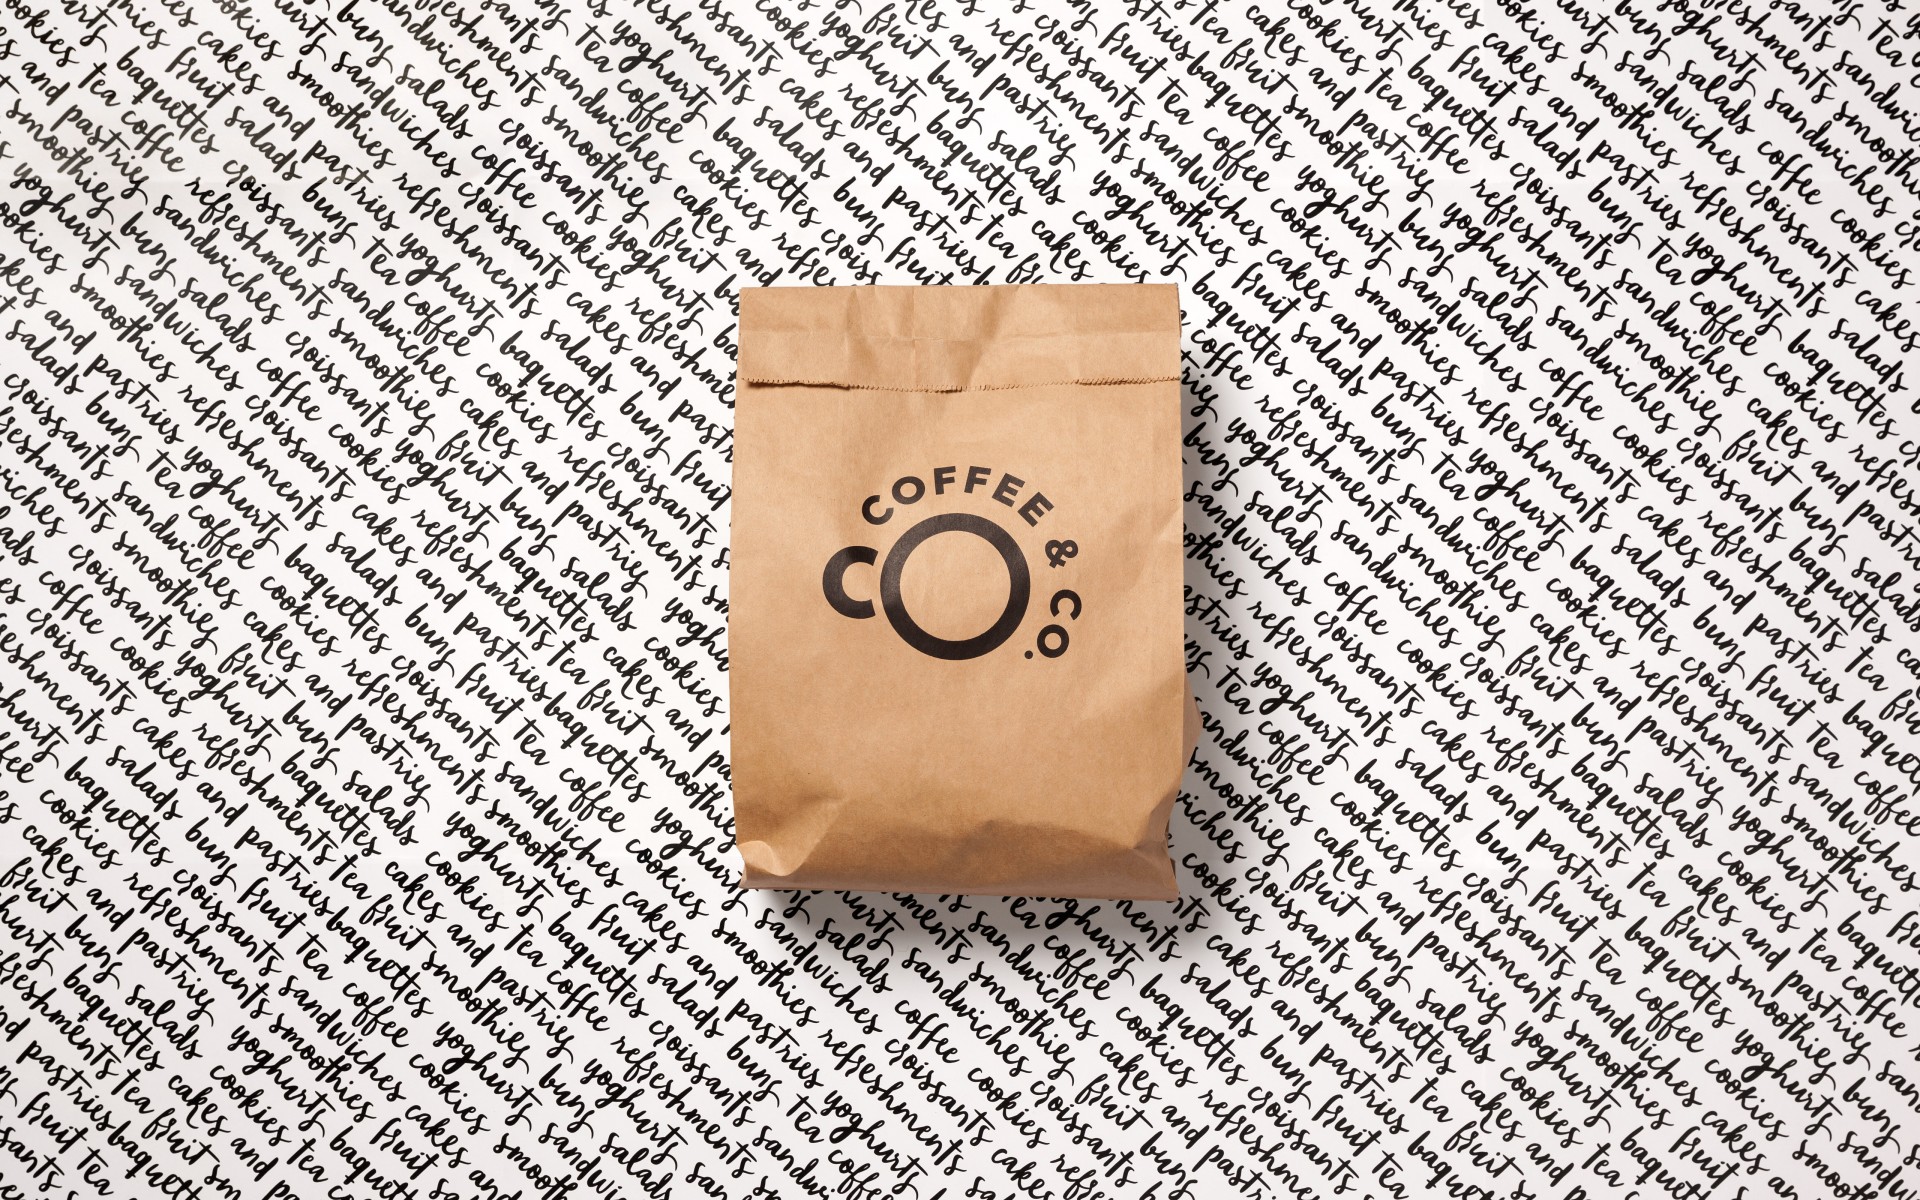 Coffee & Co. Brand Identity Spotlight